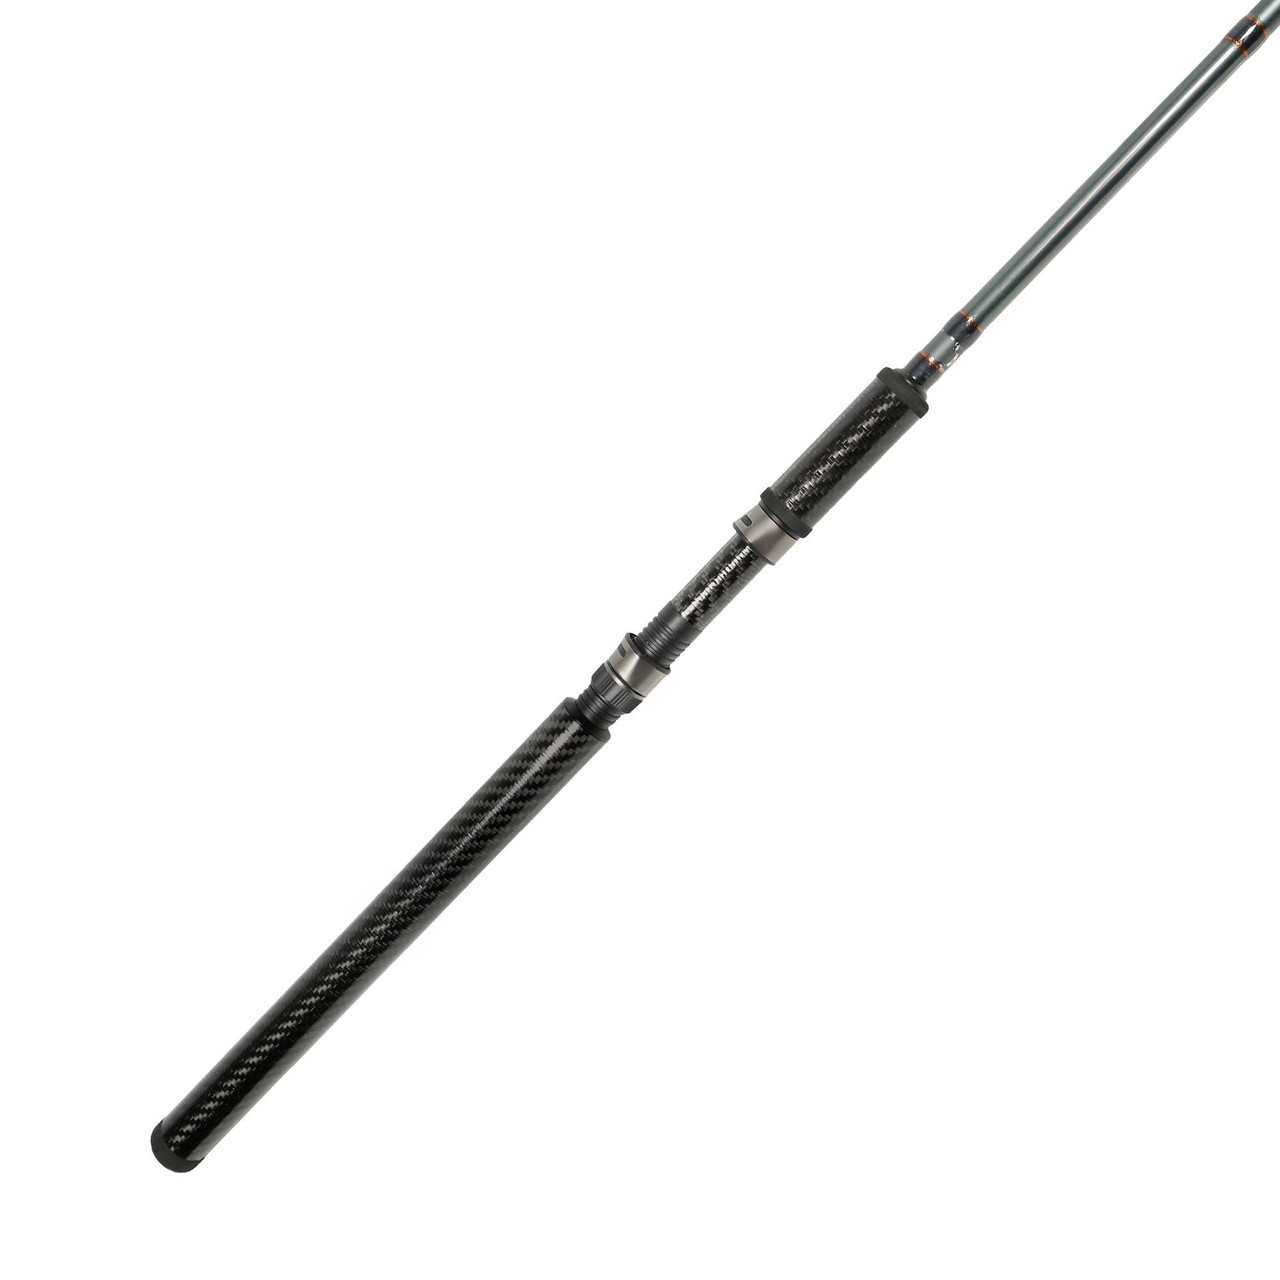 Okuma SST Carbon Grip Spinning Rod - SST-S-962M-CGa